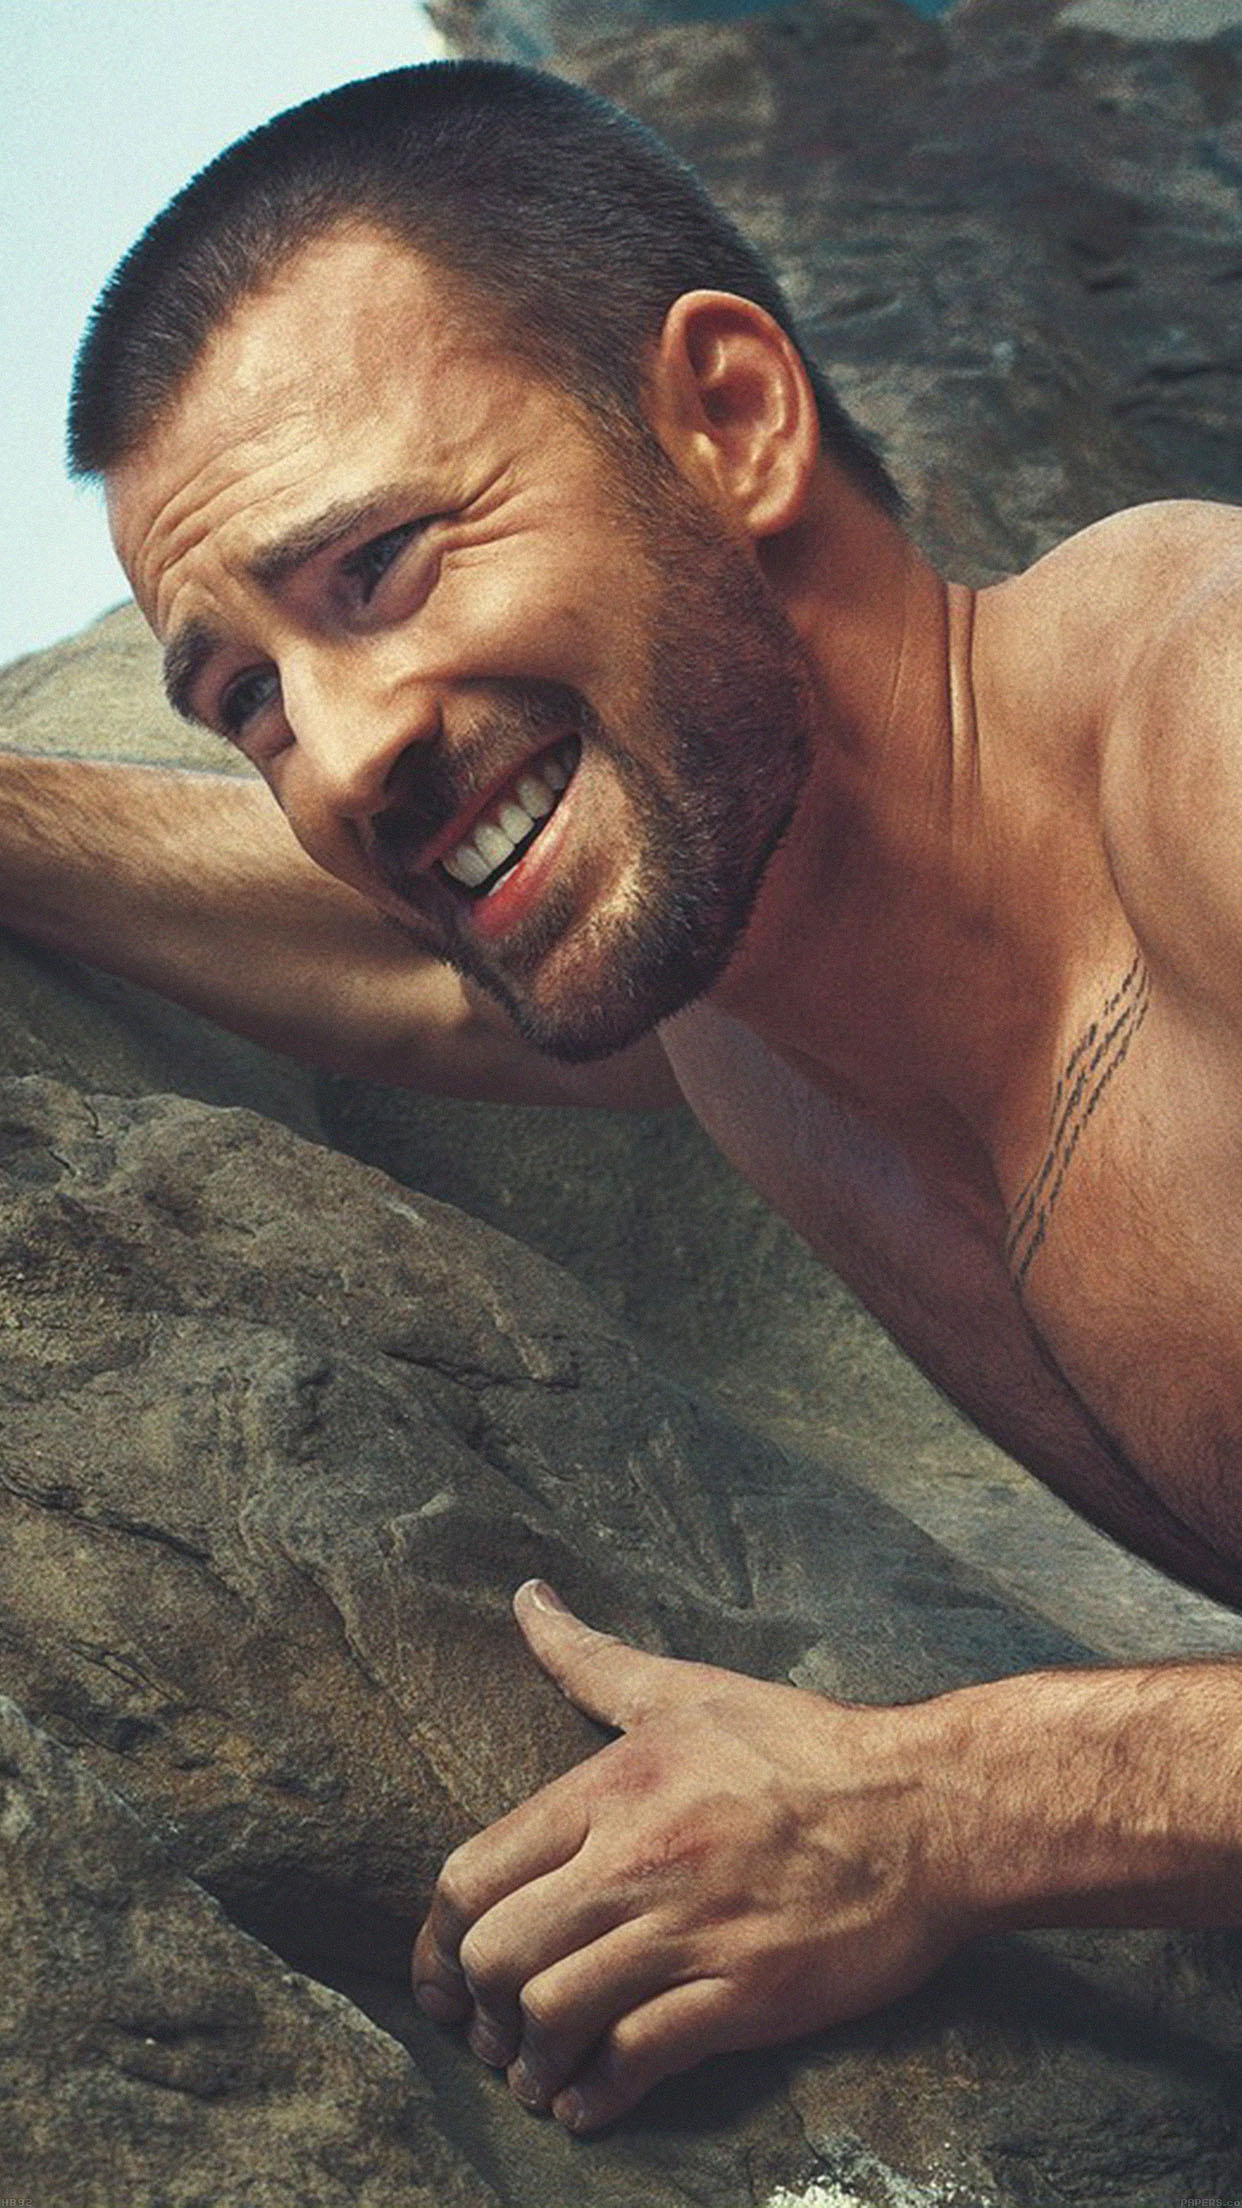 Chris Evans Rock Climbing Star Android wallpaper